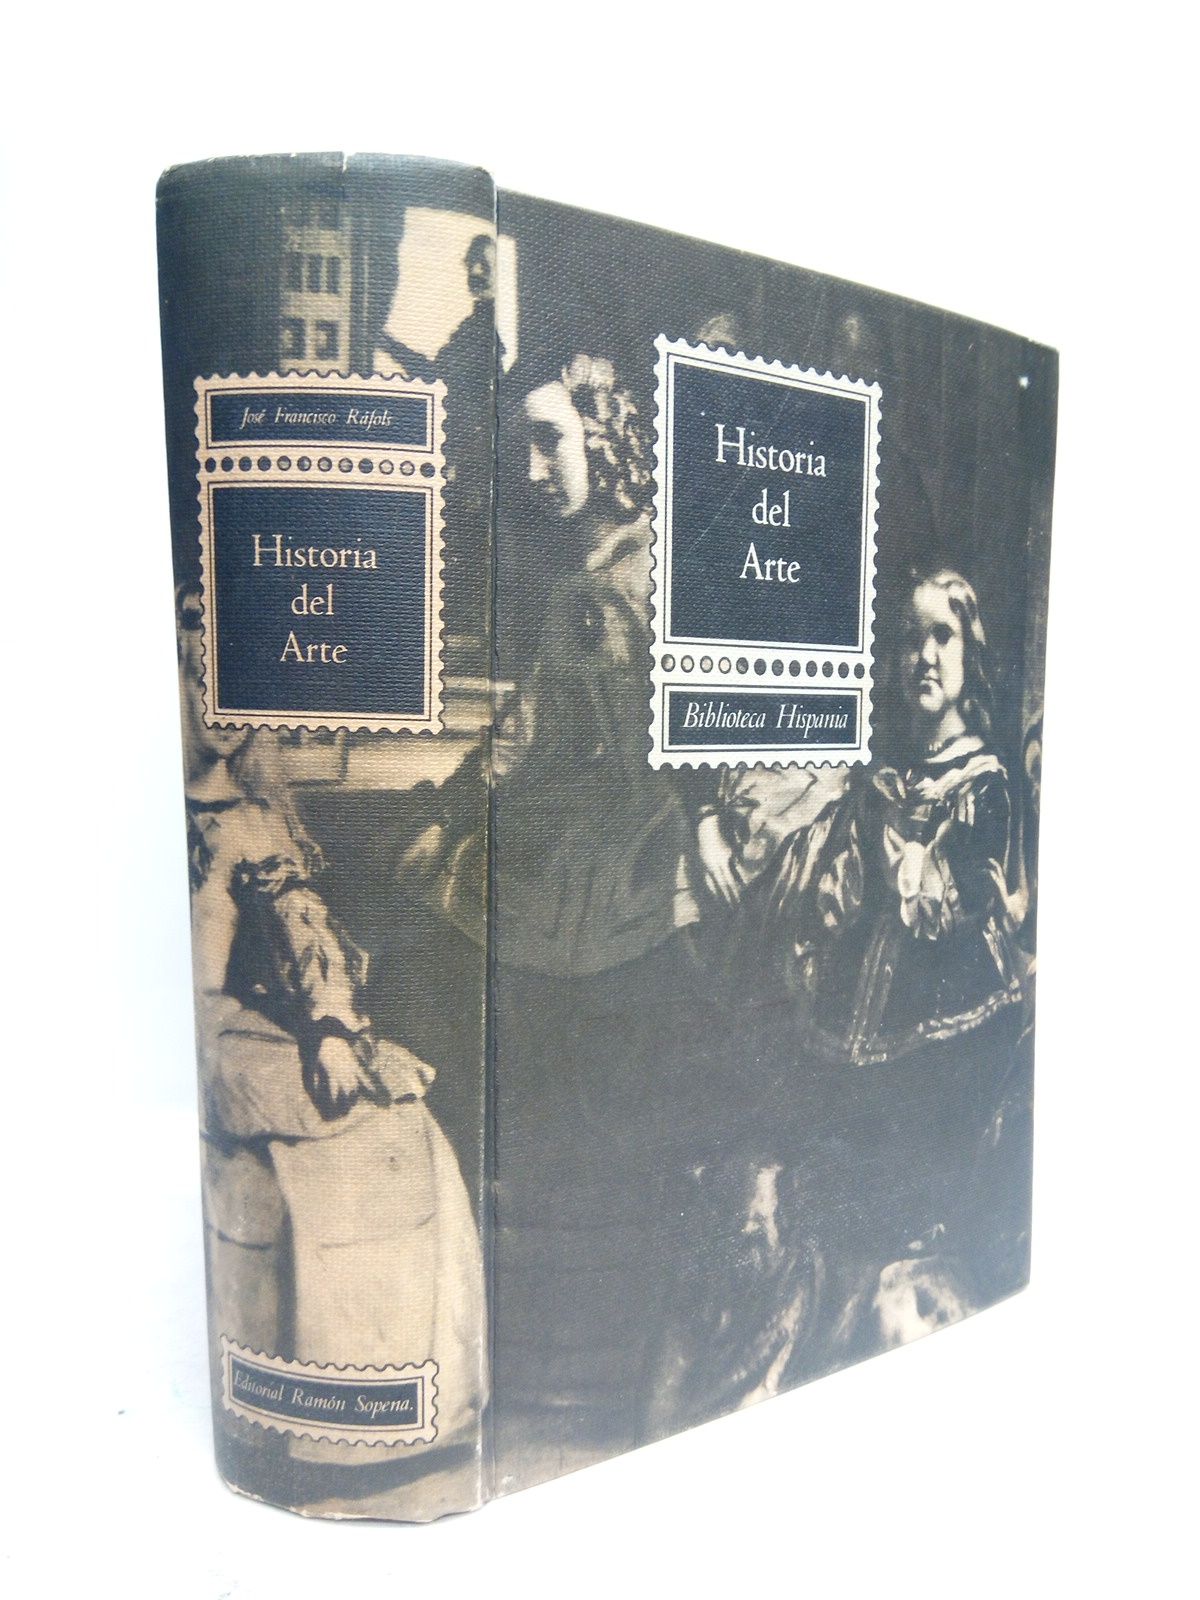 RAFOLS, J. F. - Historia del Arte. (Premio Pelford 1943 de la 